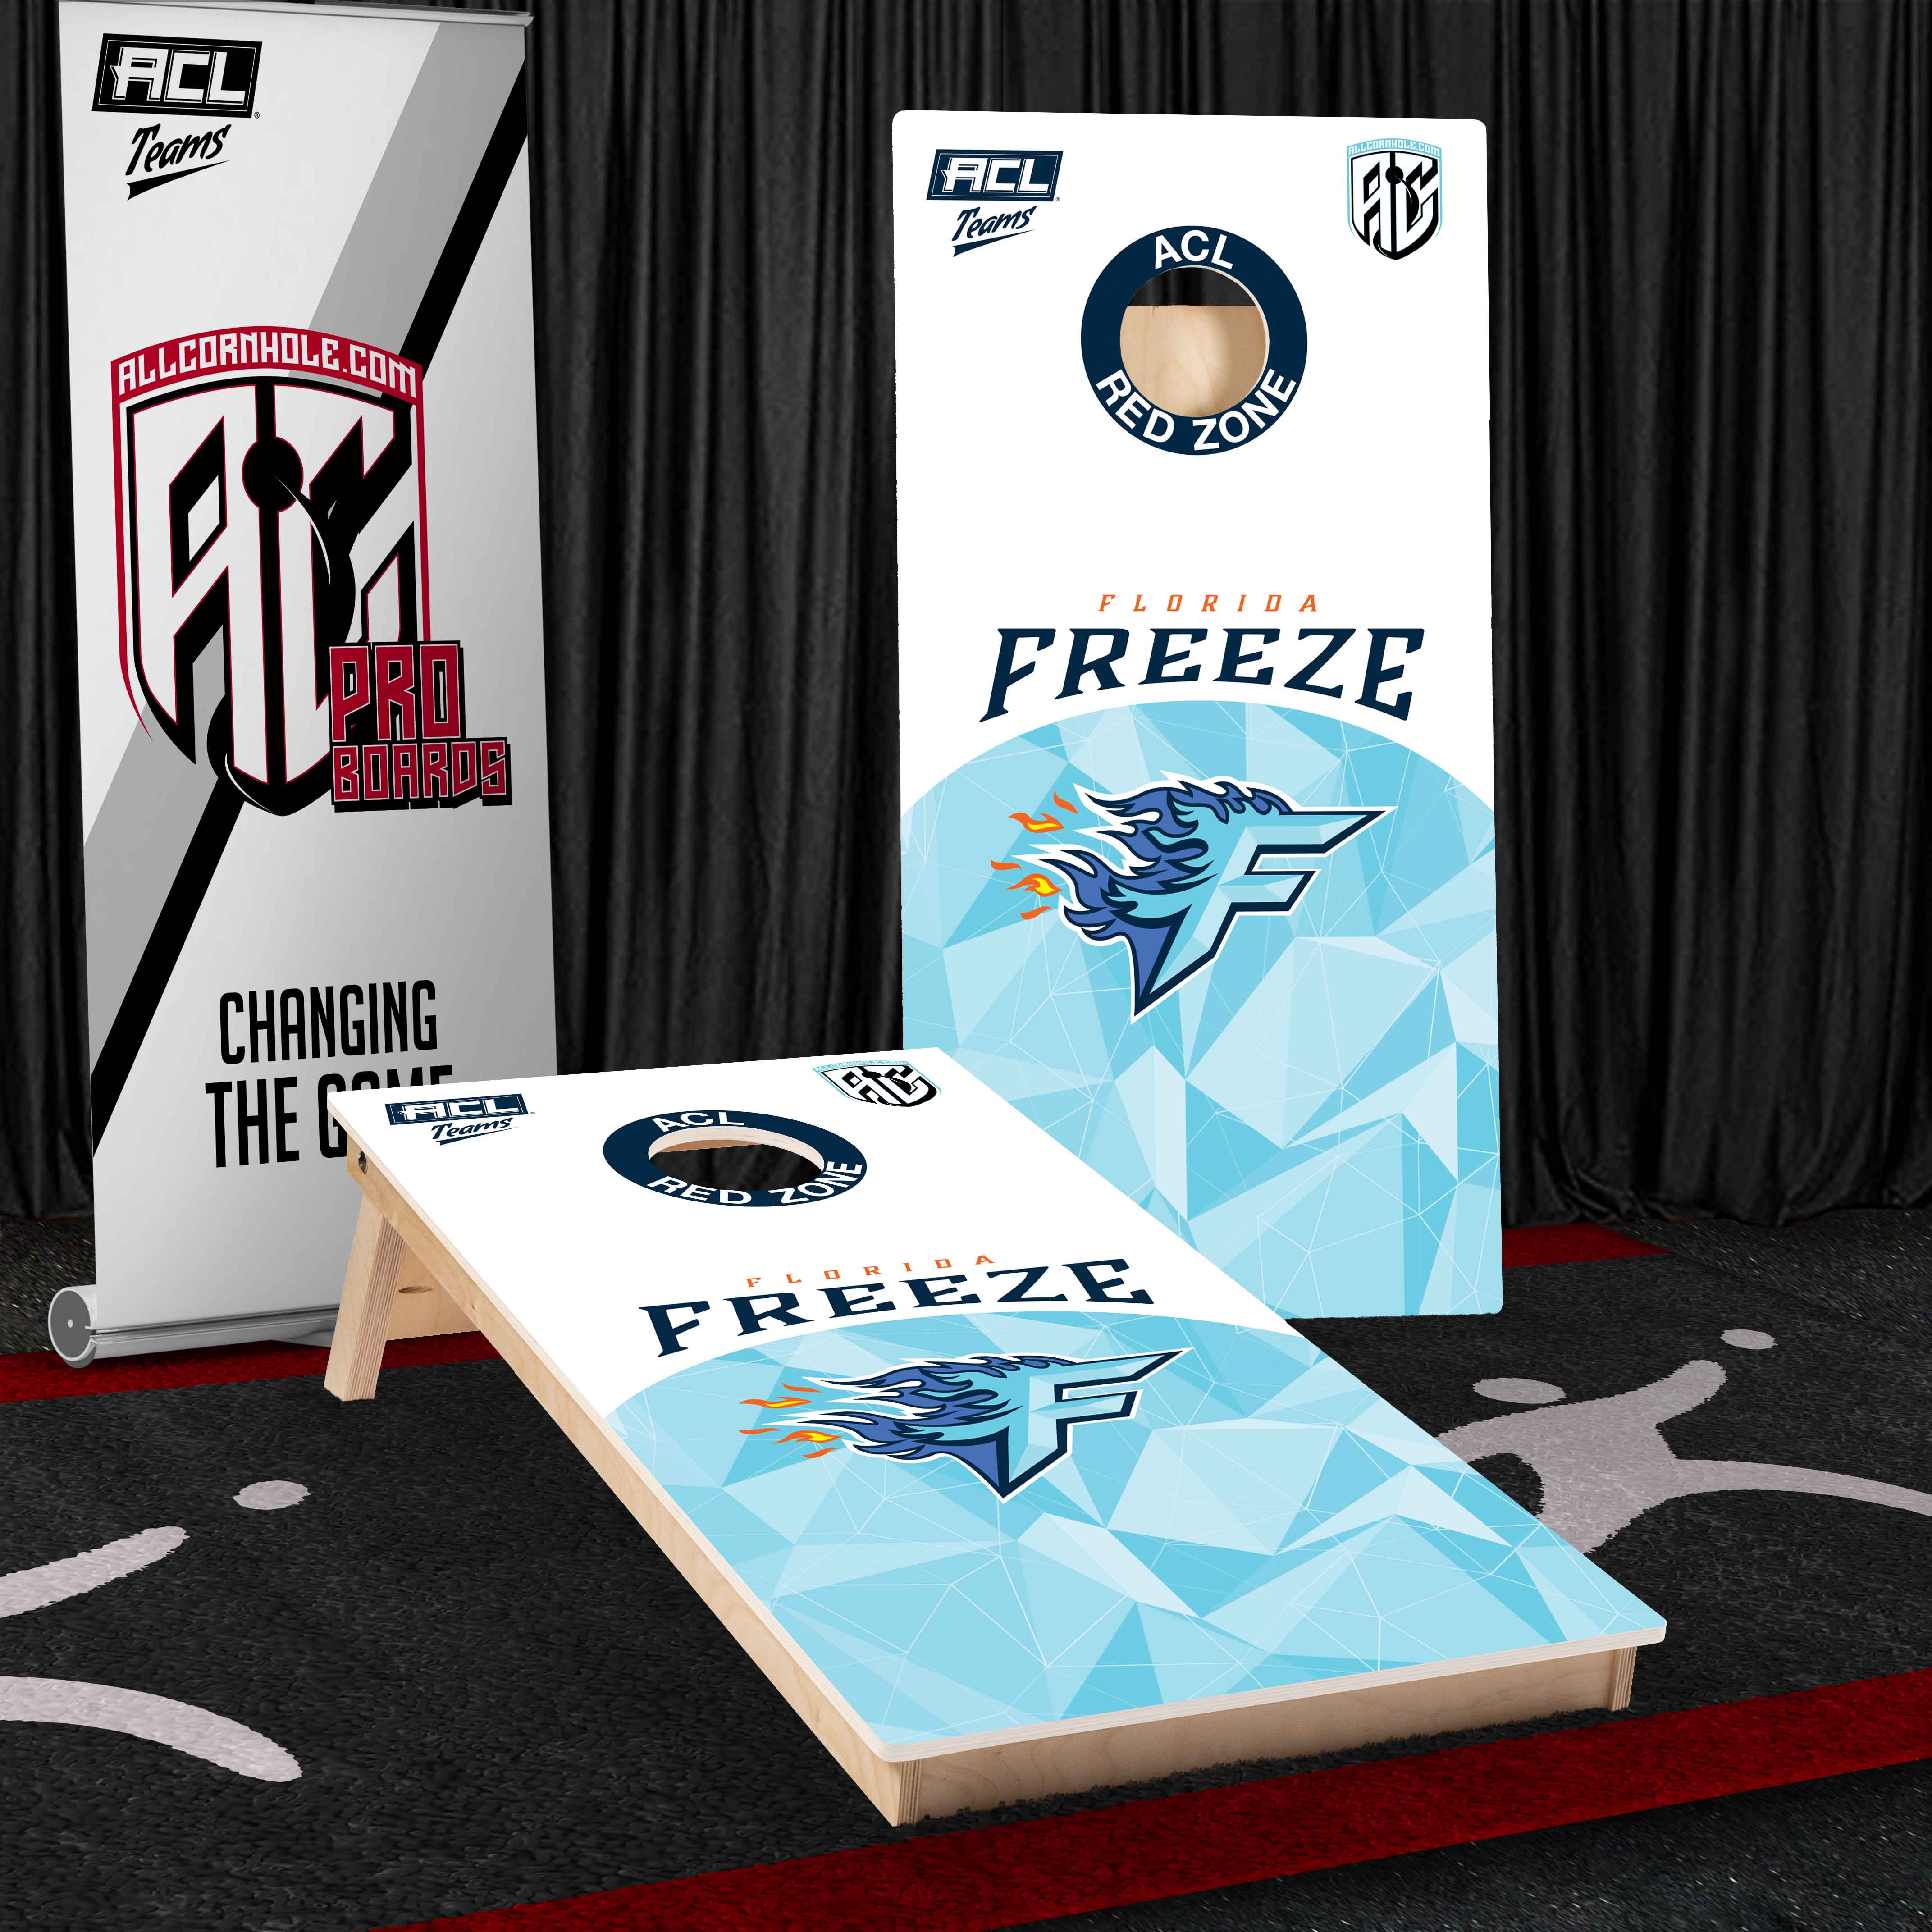 ACL Teams Pro Cornhole Board - Florida Freeze